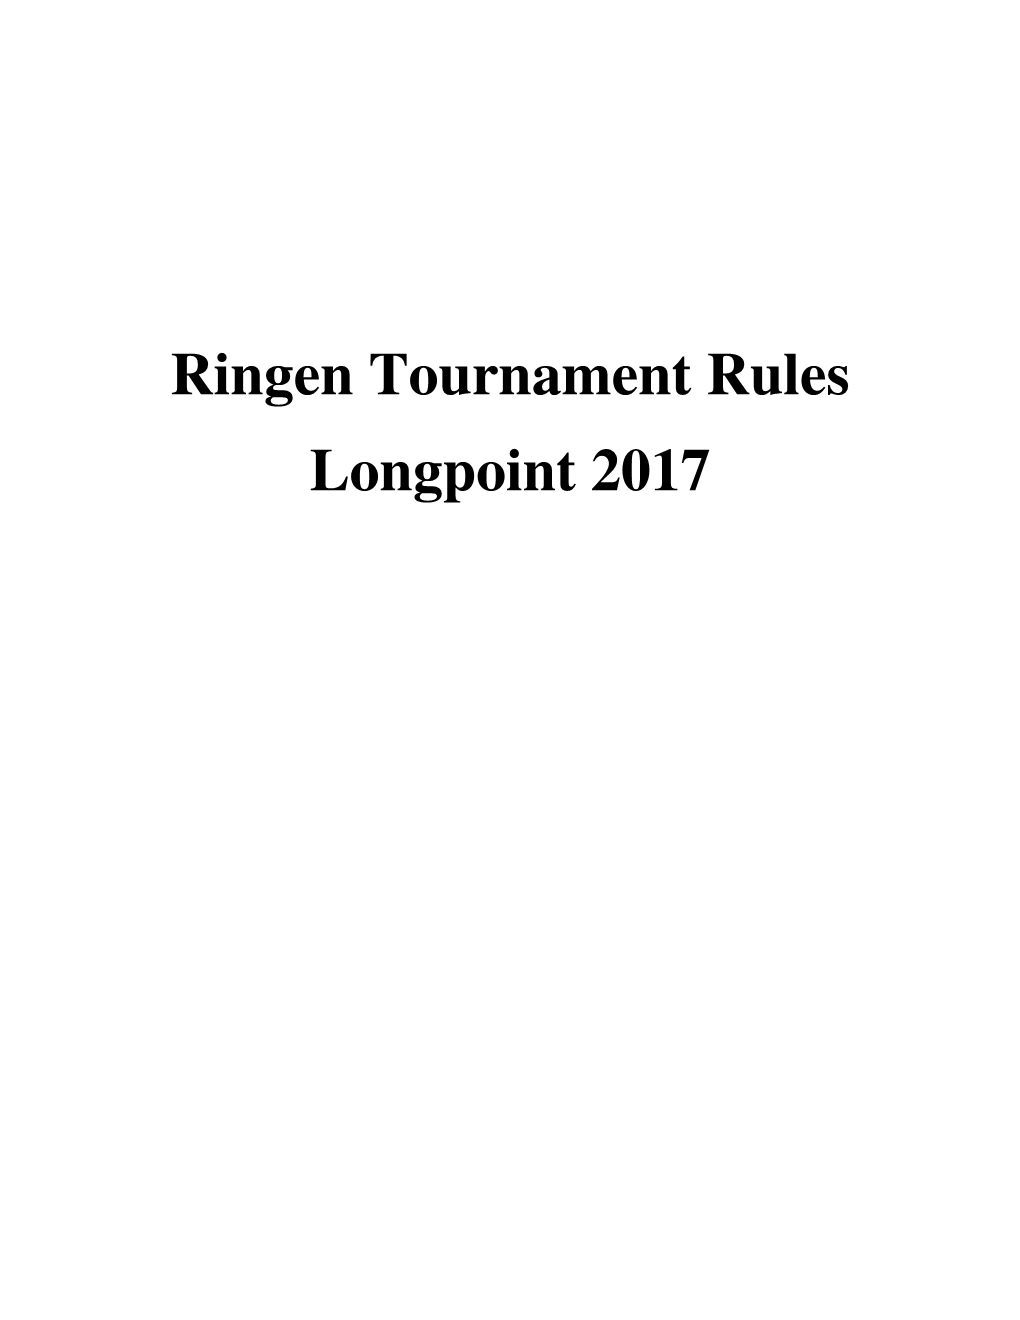 Ringen Tournament Rules Longpoint 2017